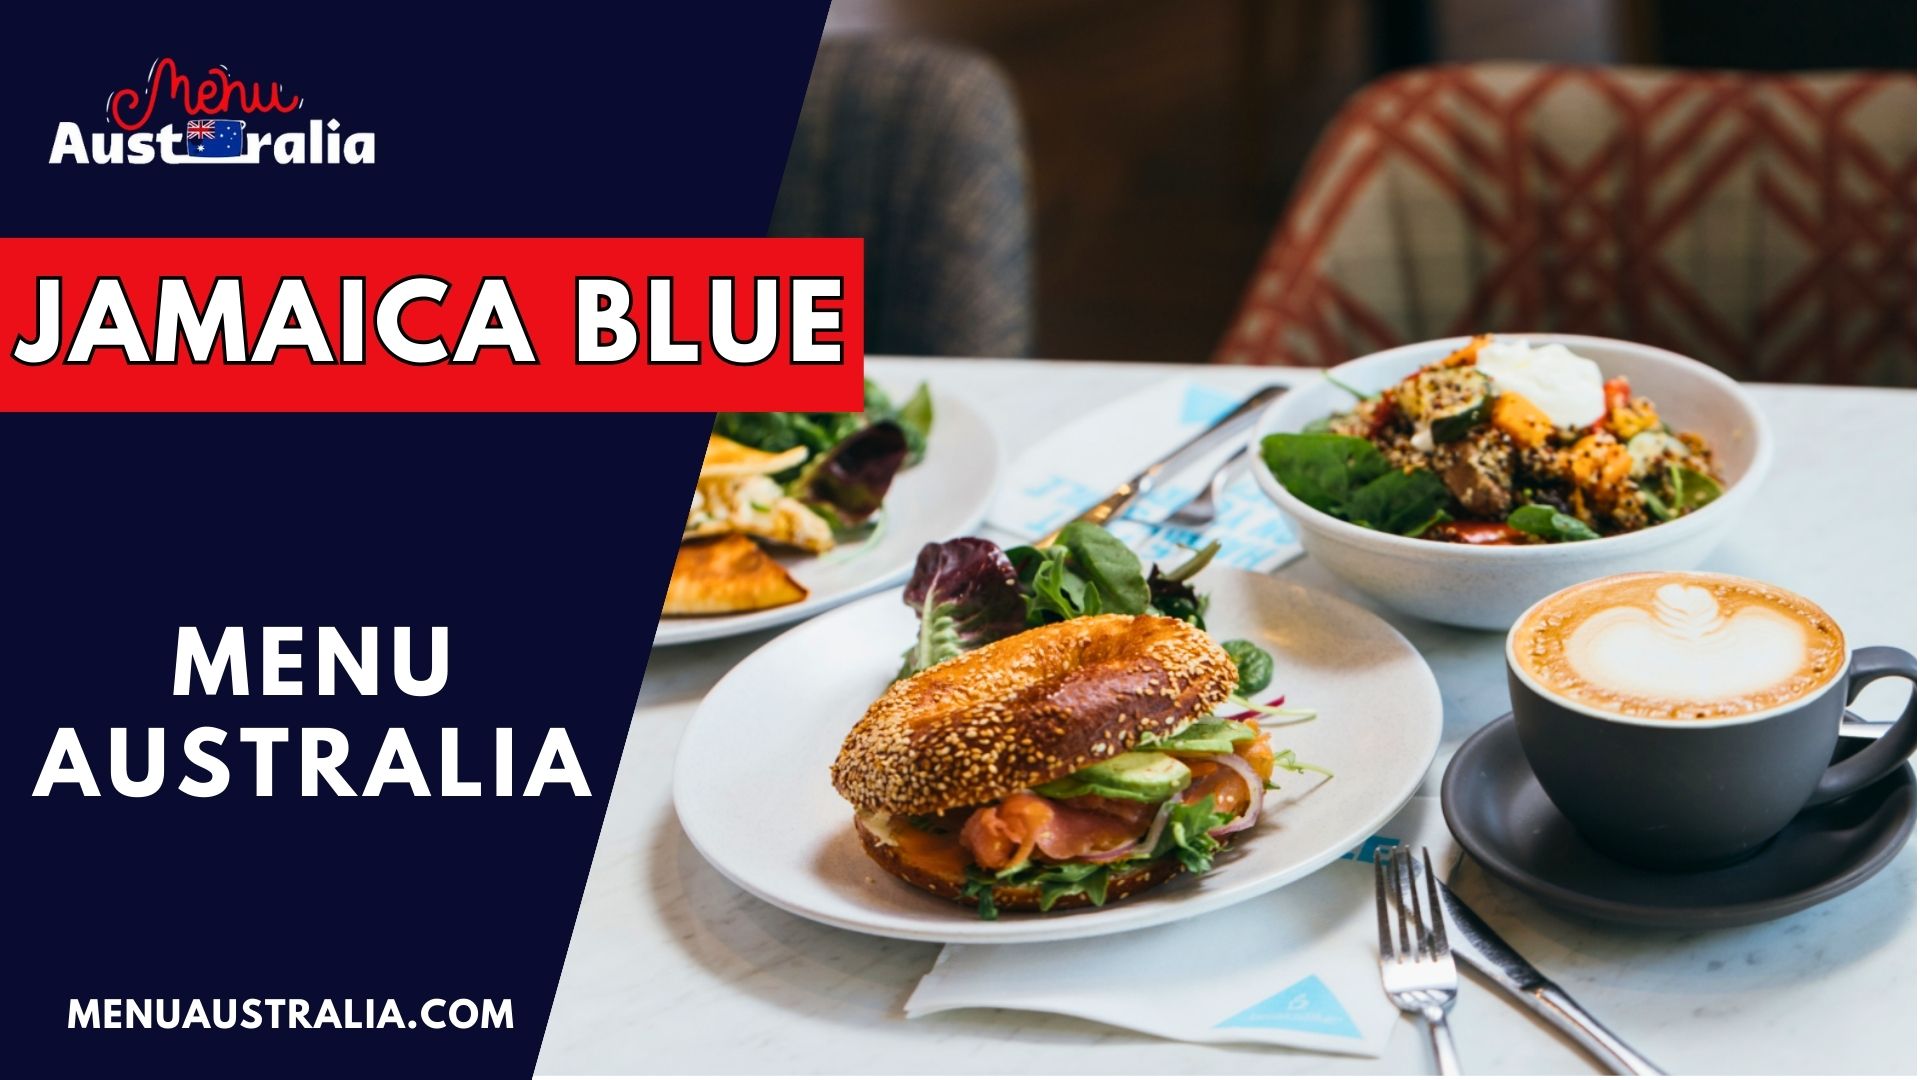 Jamaica Blue Menu Australia